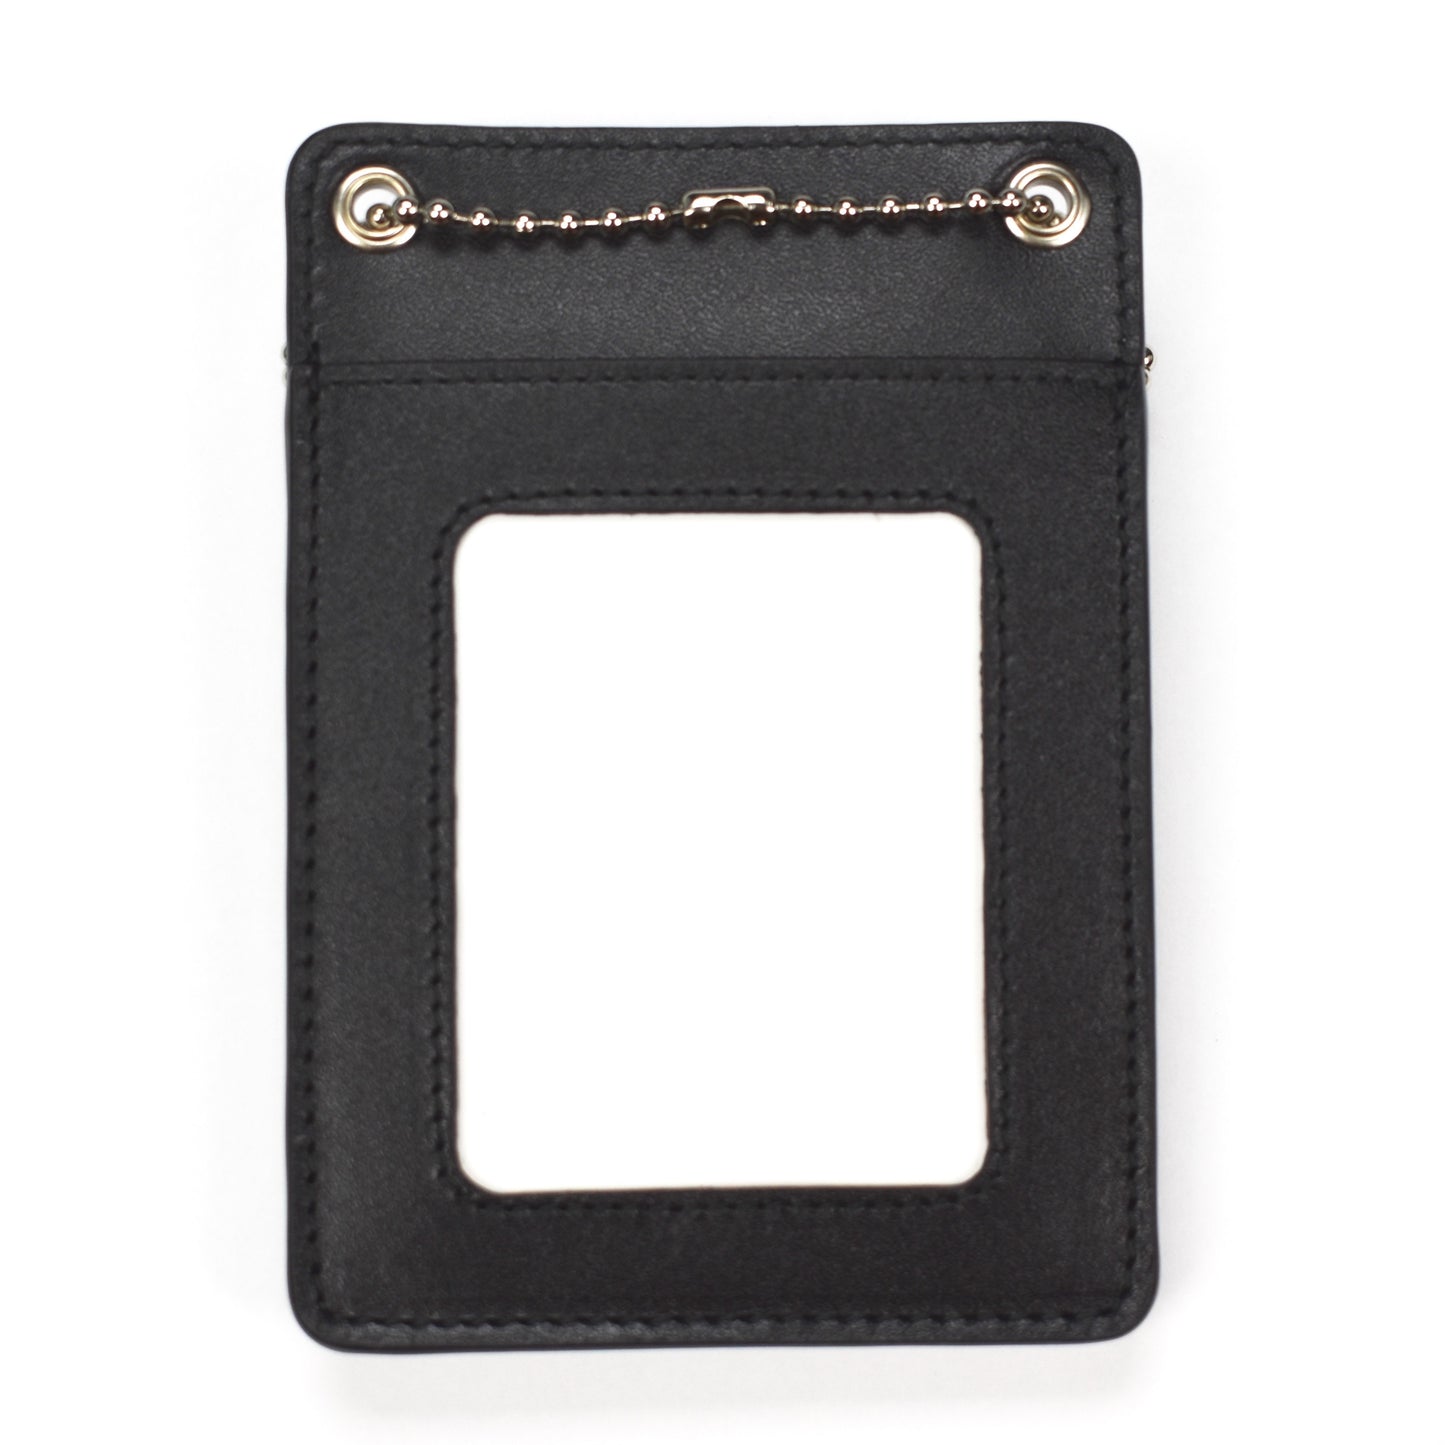 Supreme - Black Leather Box Logo ID Wallet